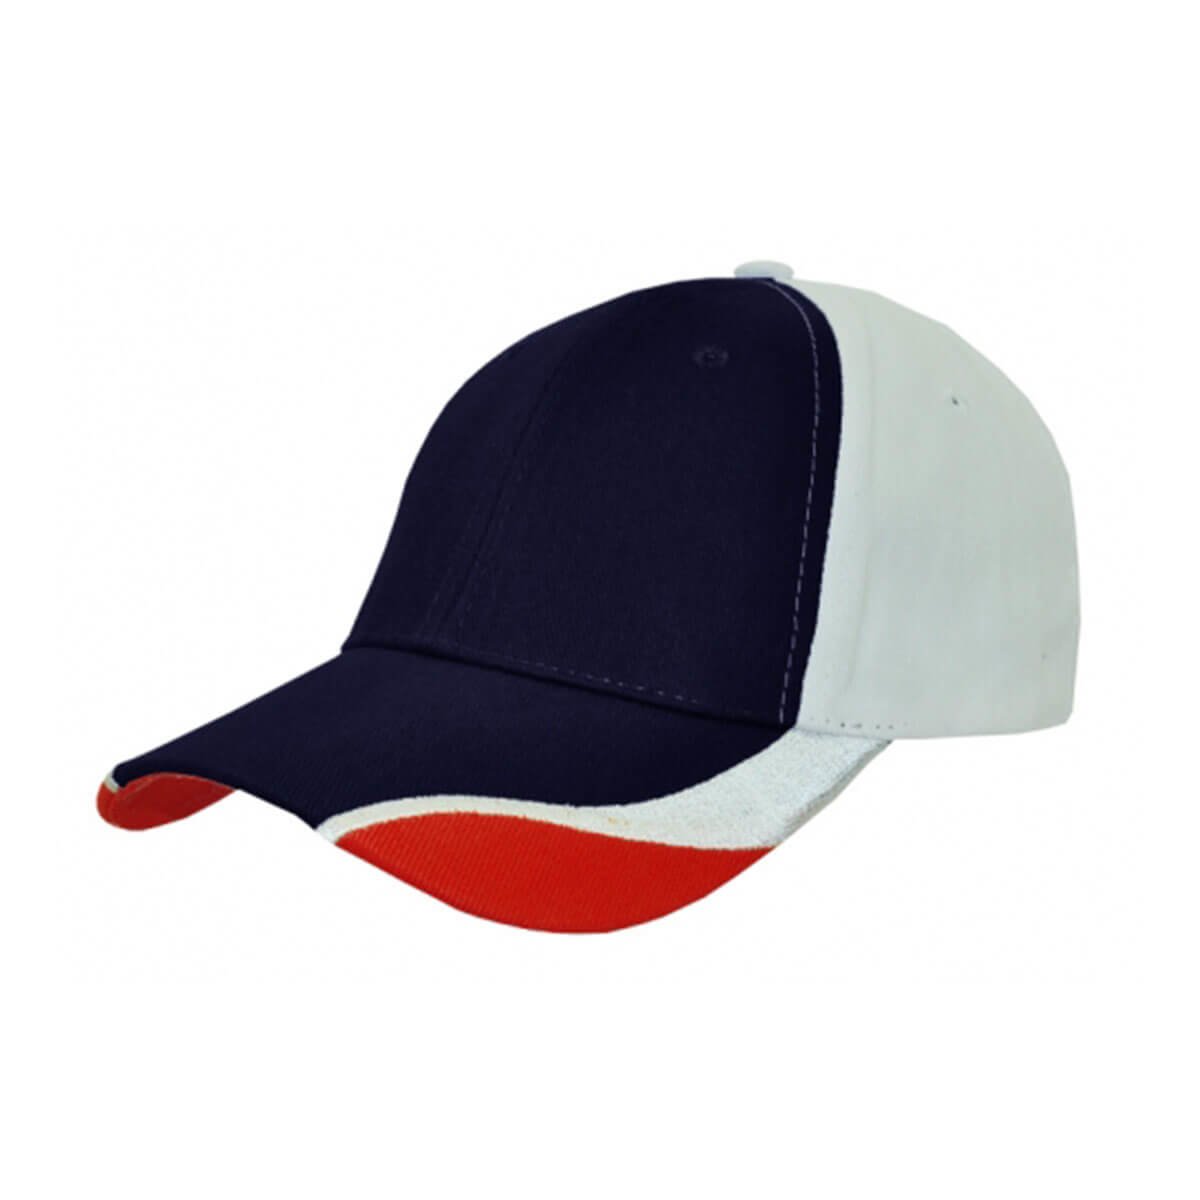 Contour Cap-Navy / White / Red